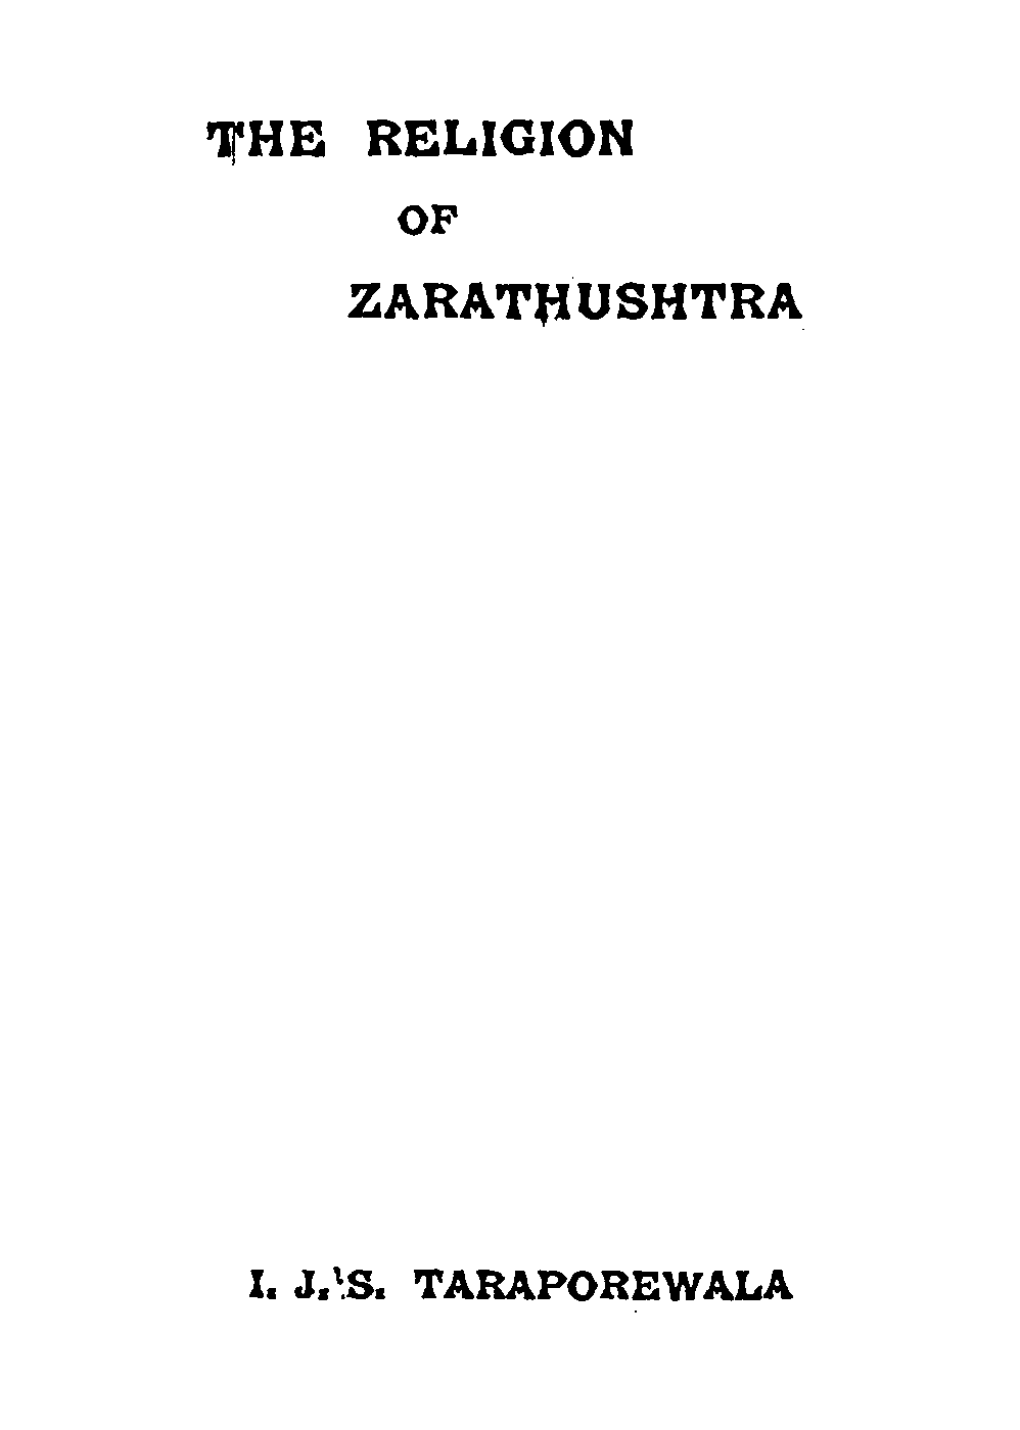 The Religion of Zarathushtra the Religion of Zarathushtra